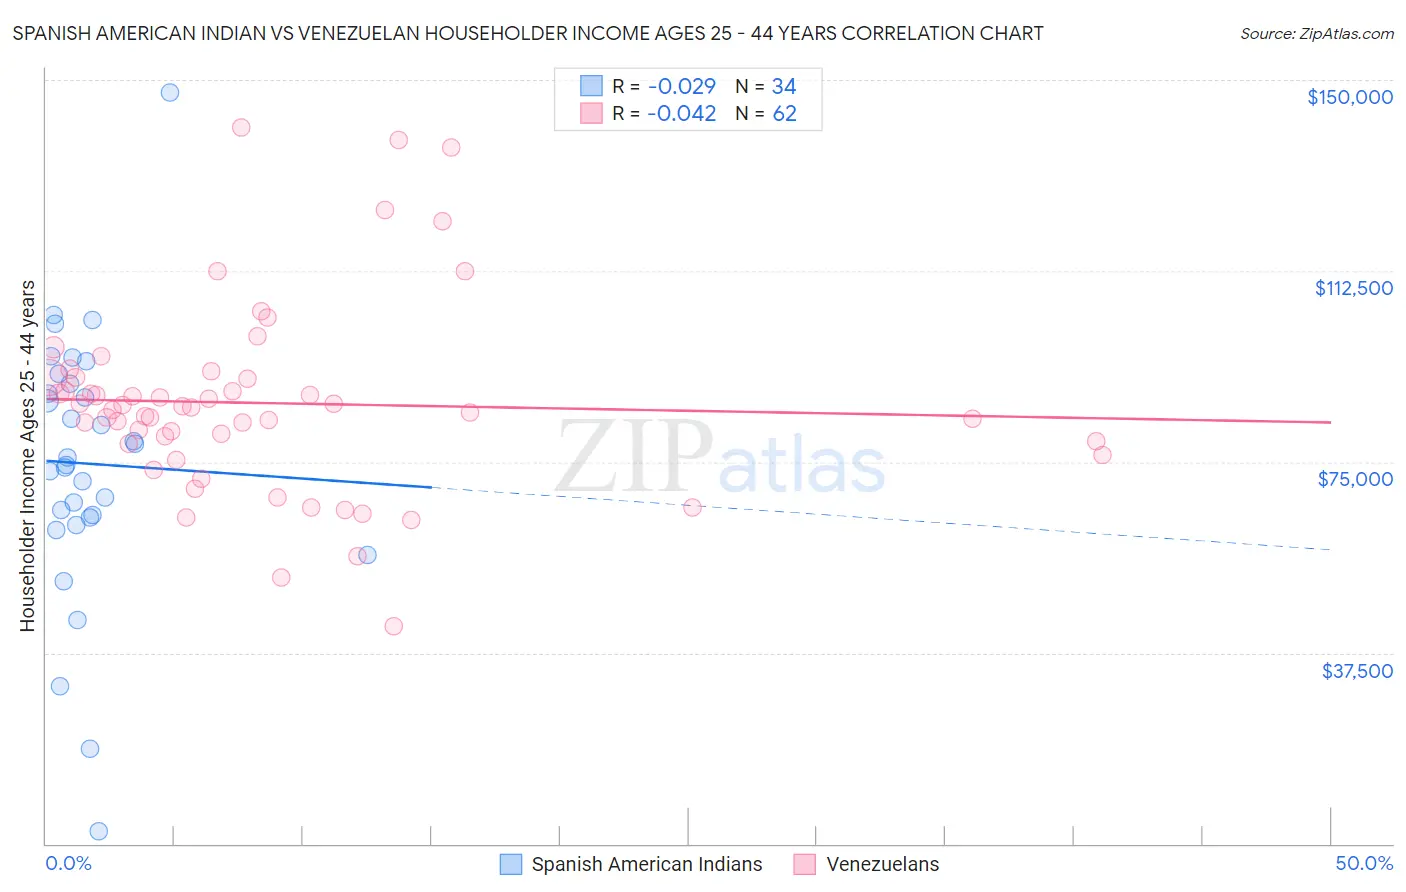 Spanish American Indian vs Venezuelan Householder Income Ages 25 - 44 years